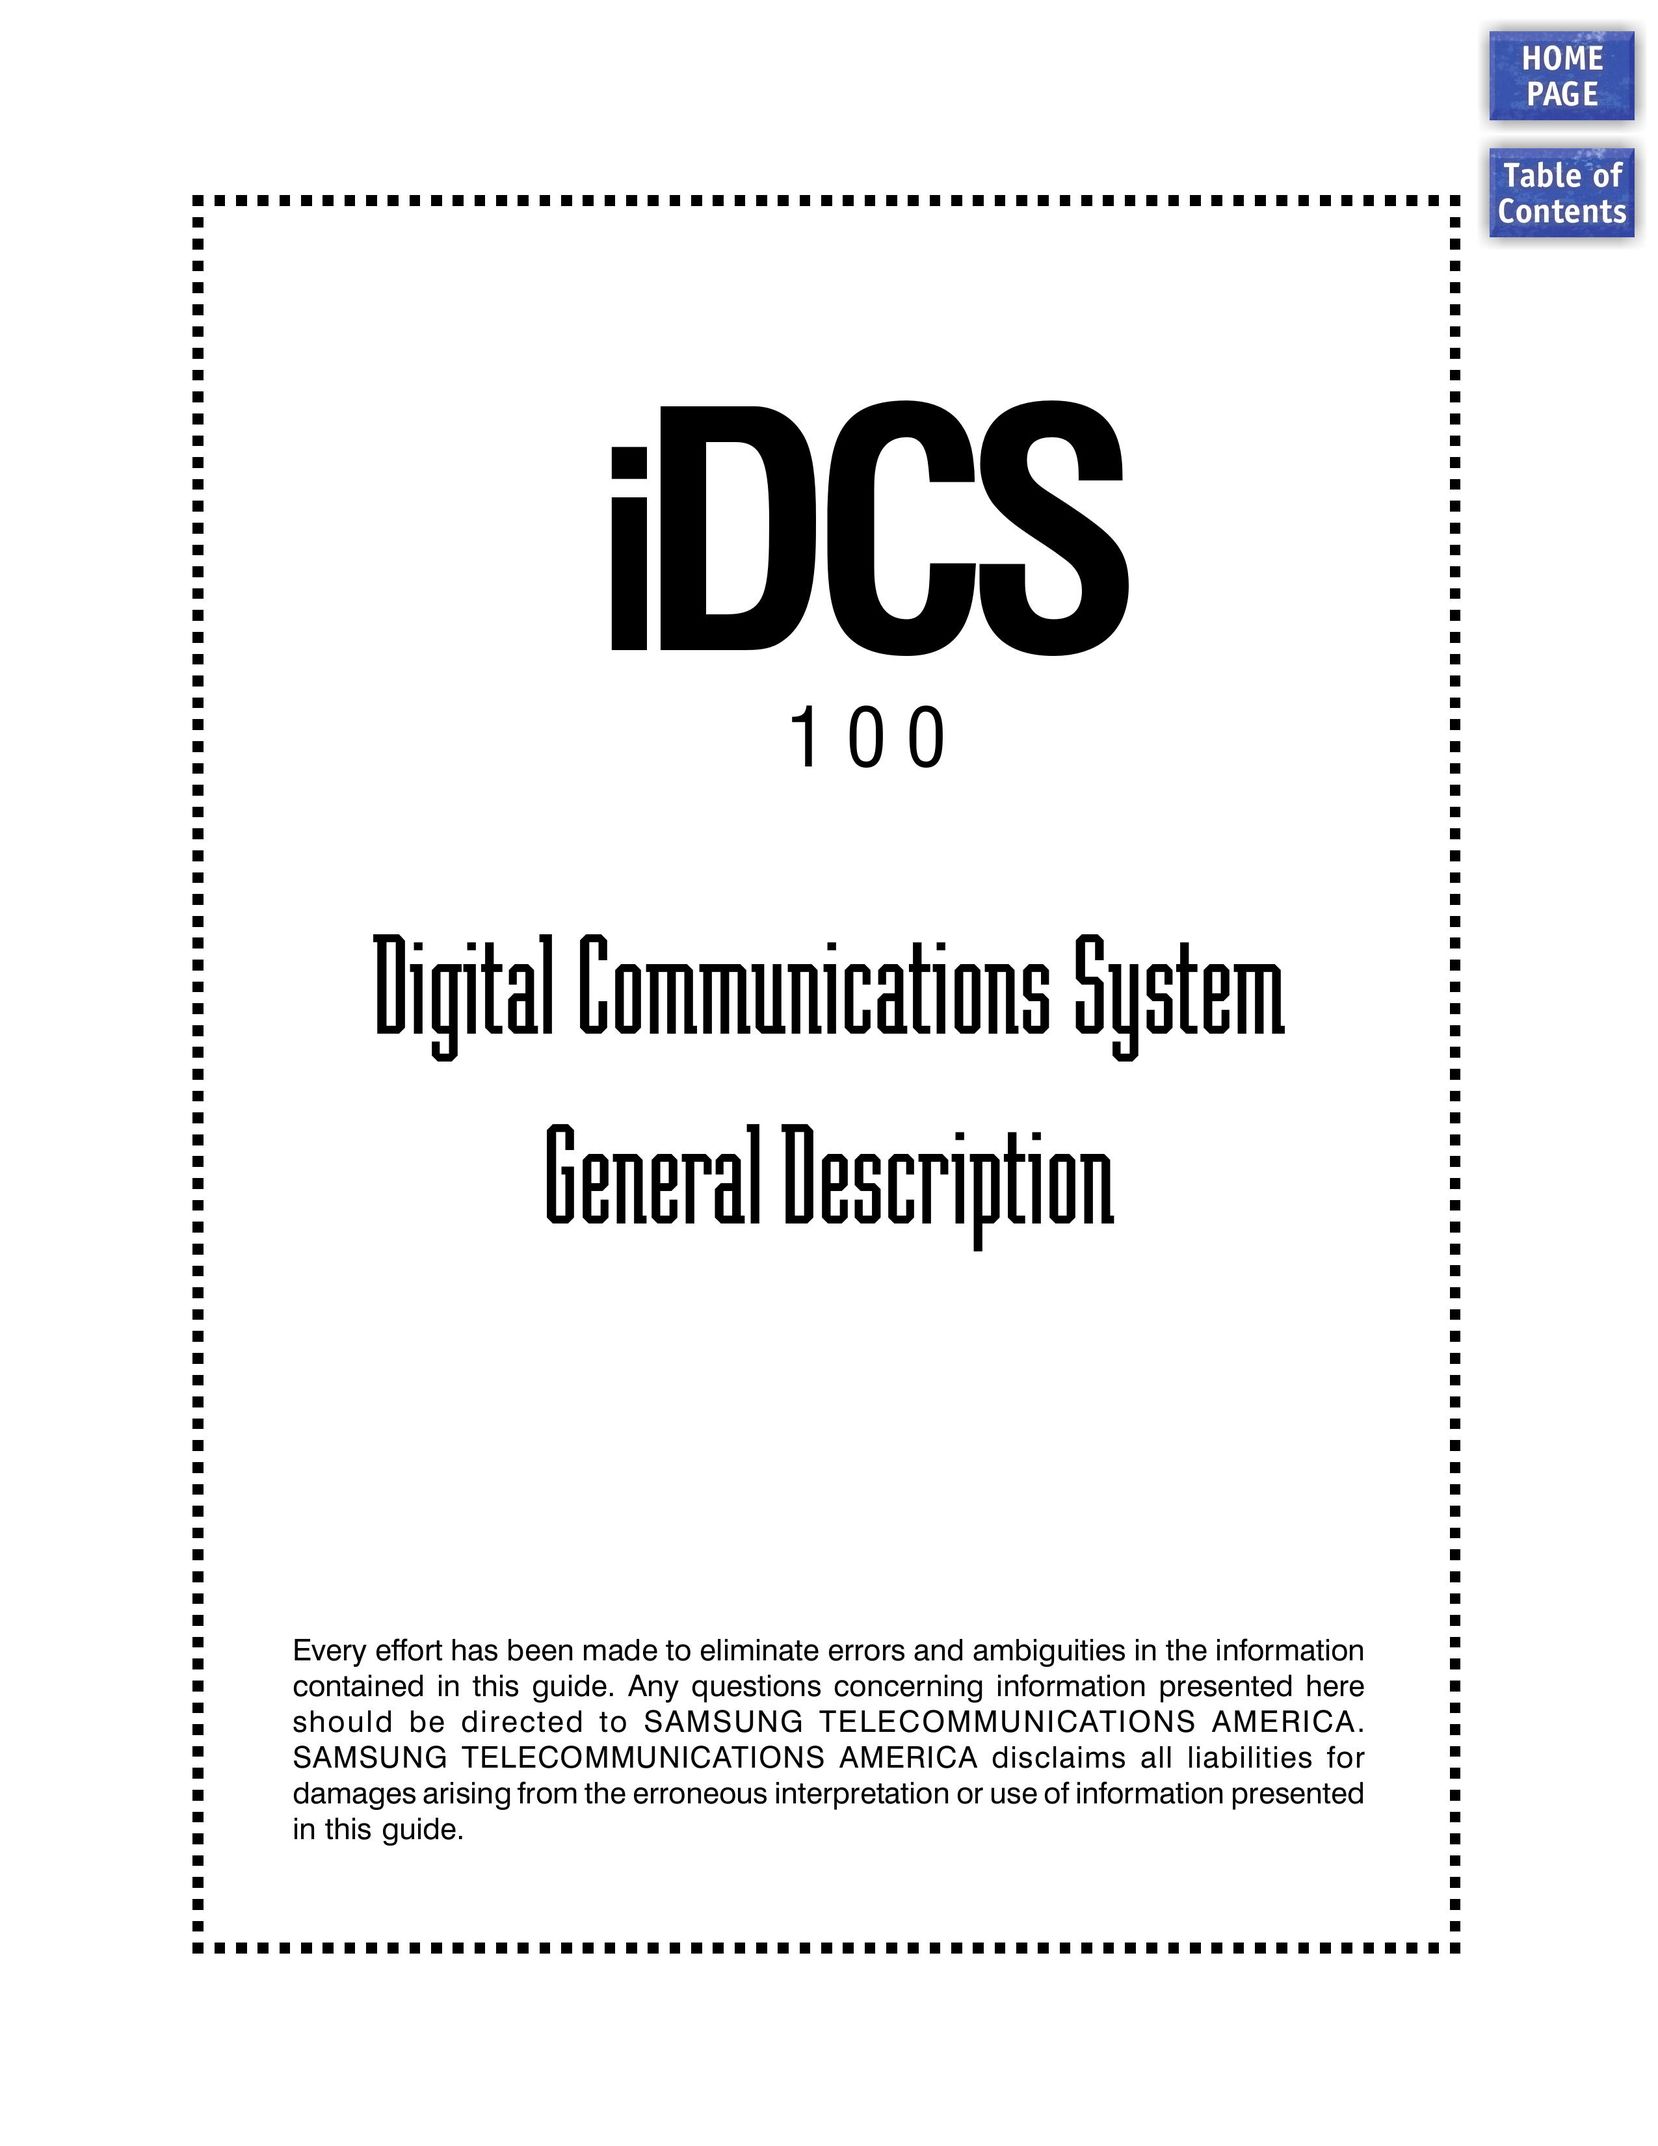 Samsung iDCS 100 Telephone User Manual